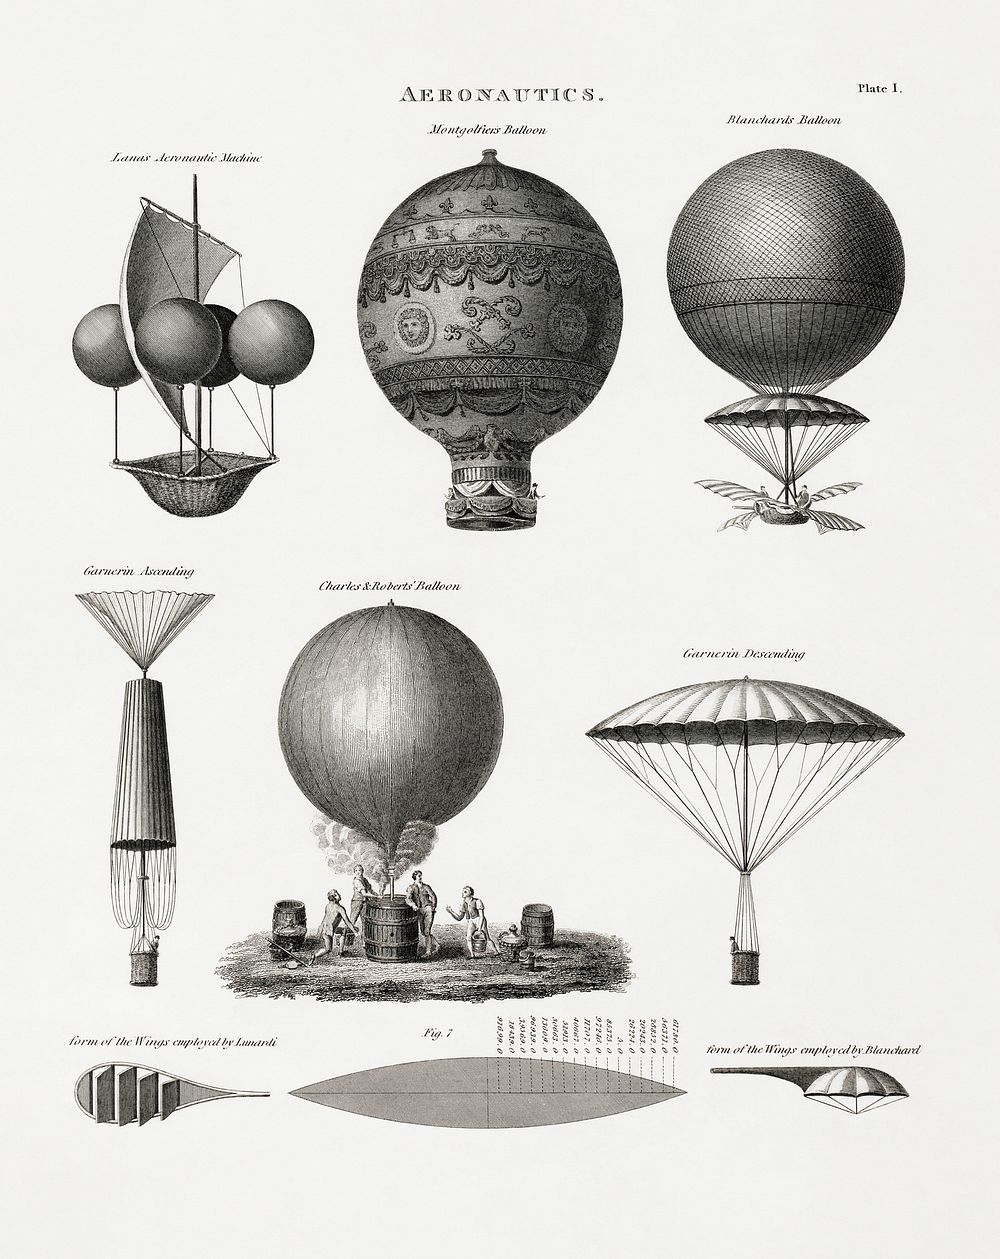 Ambrose William Warren's Aeronautics (1818). Original public domain image from Wikimedia Commons. Digitally enhanced by…